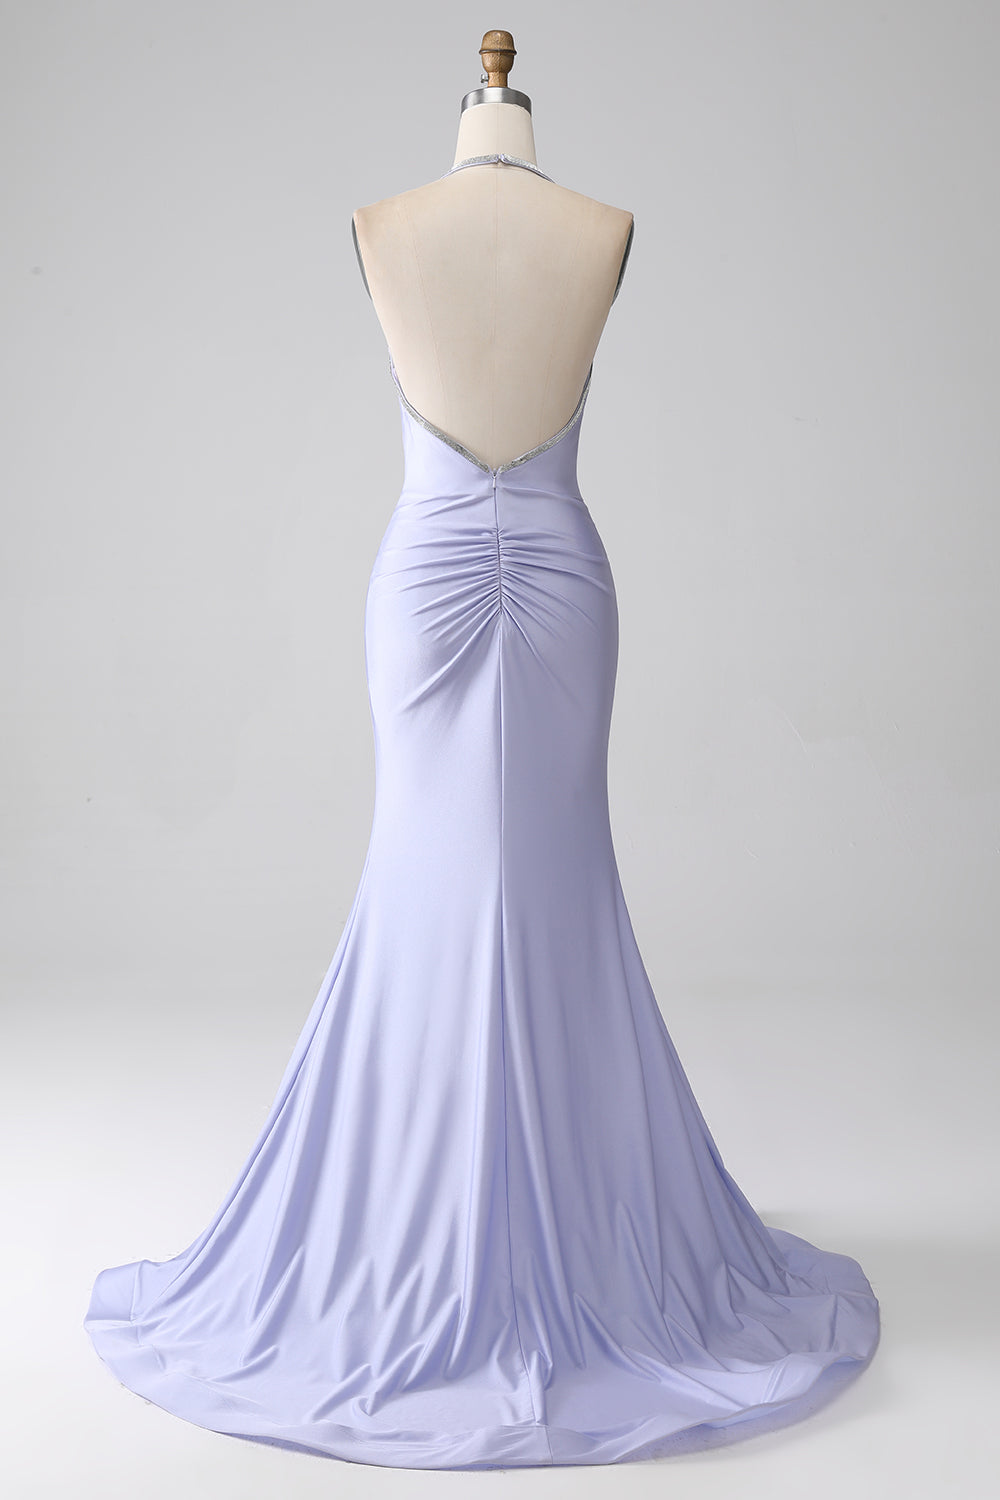 Fuchsia Mermaid Halter Neck Backless Long Prom Dress